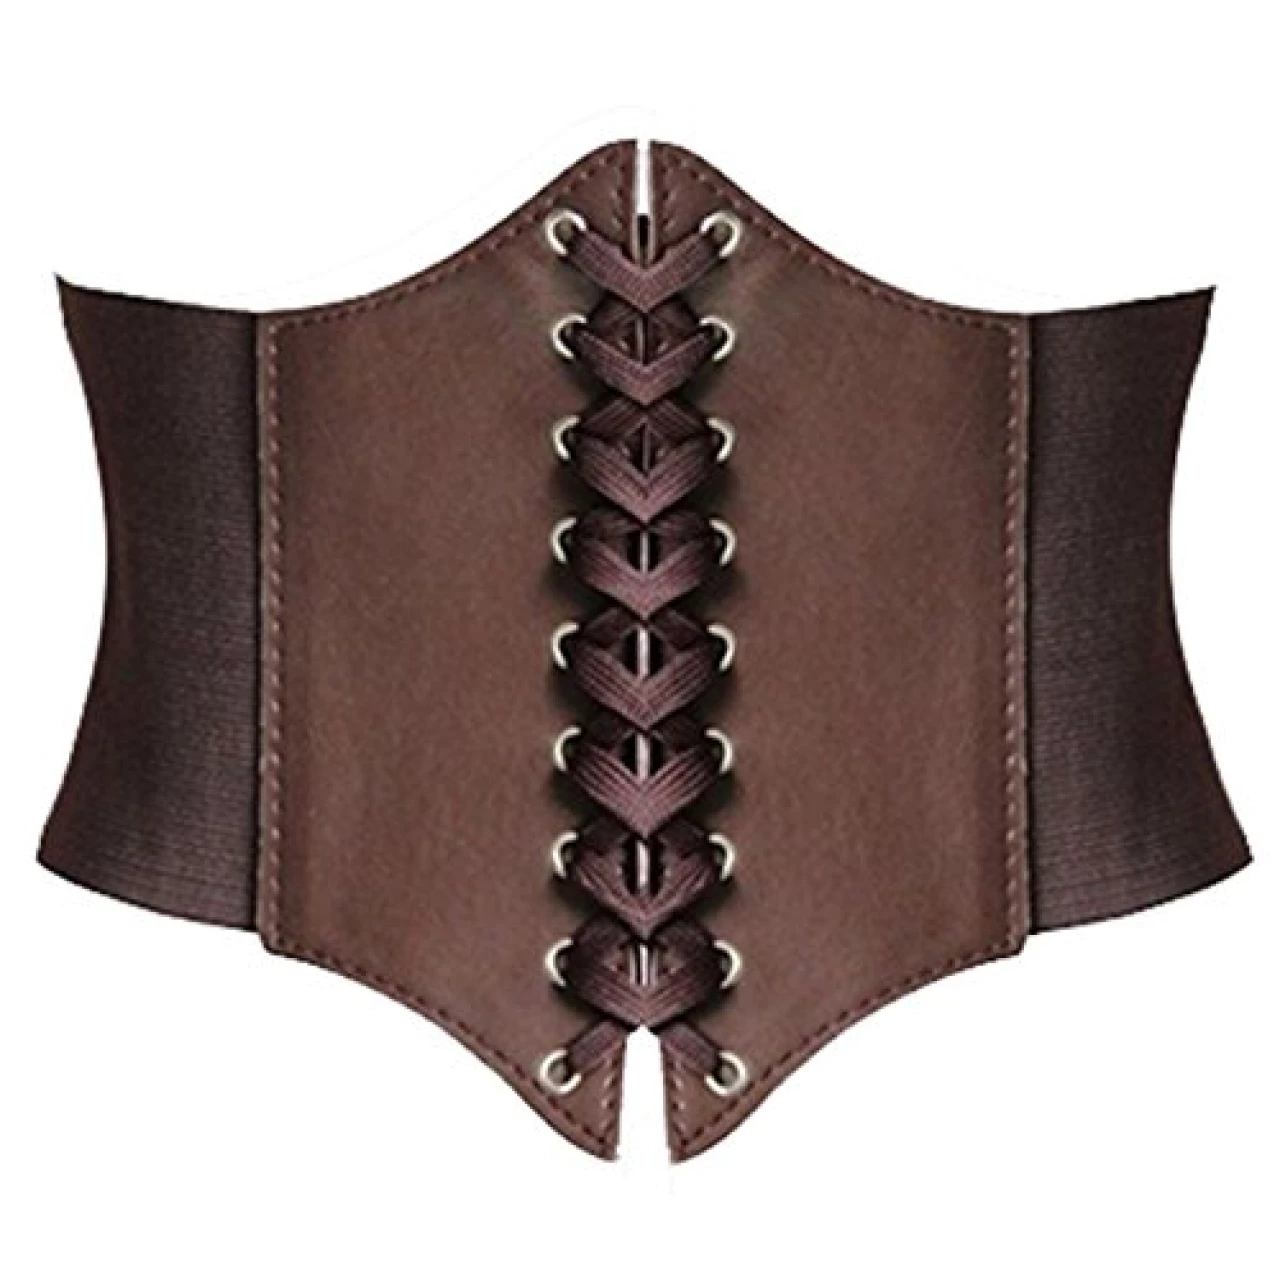 Alivila.Y Fashion Womens Faux Leather Underbust Corset Belt Bustier A13-Coffee